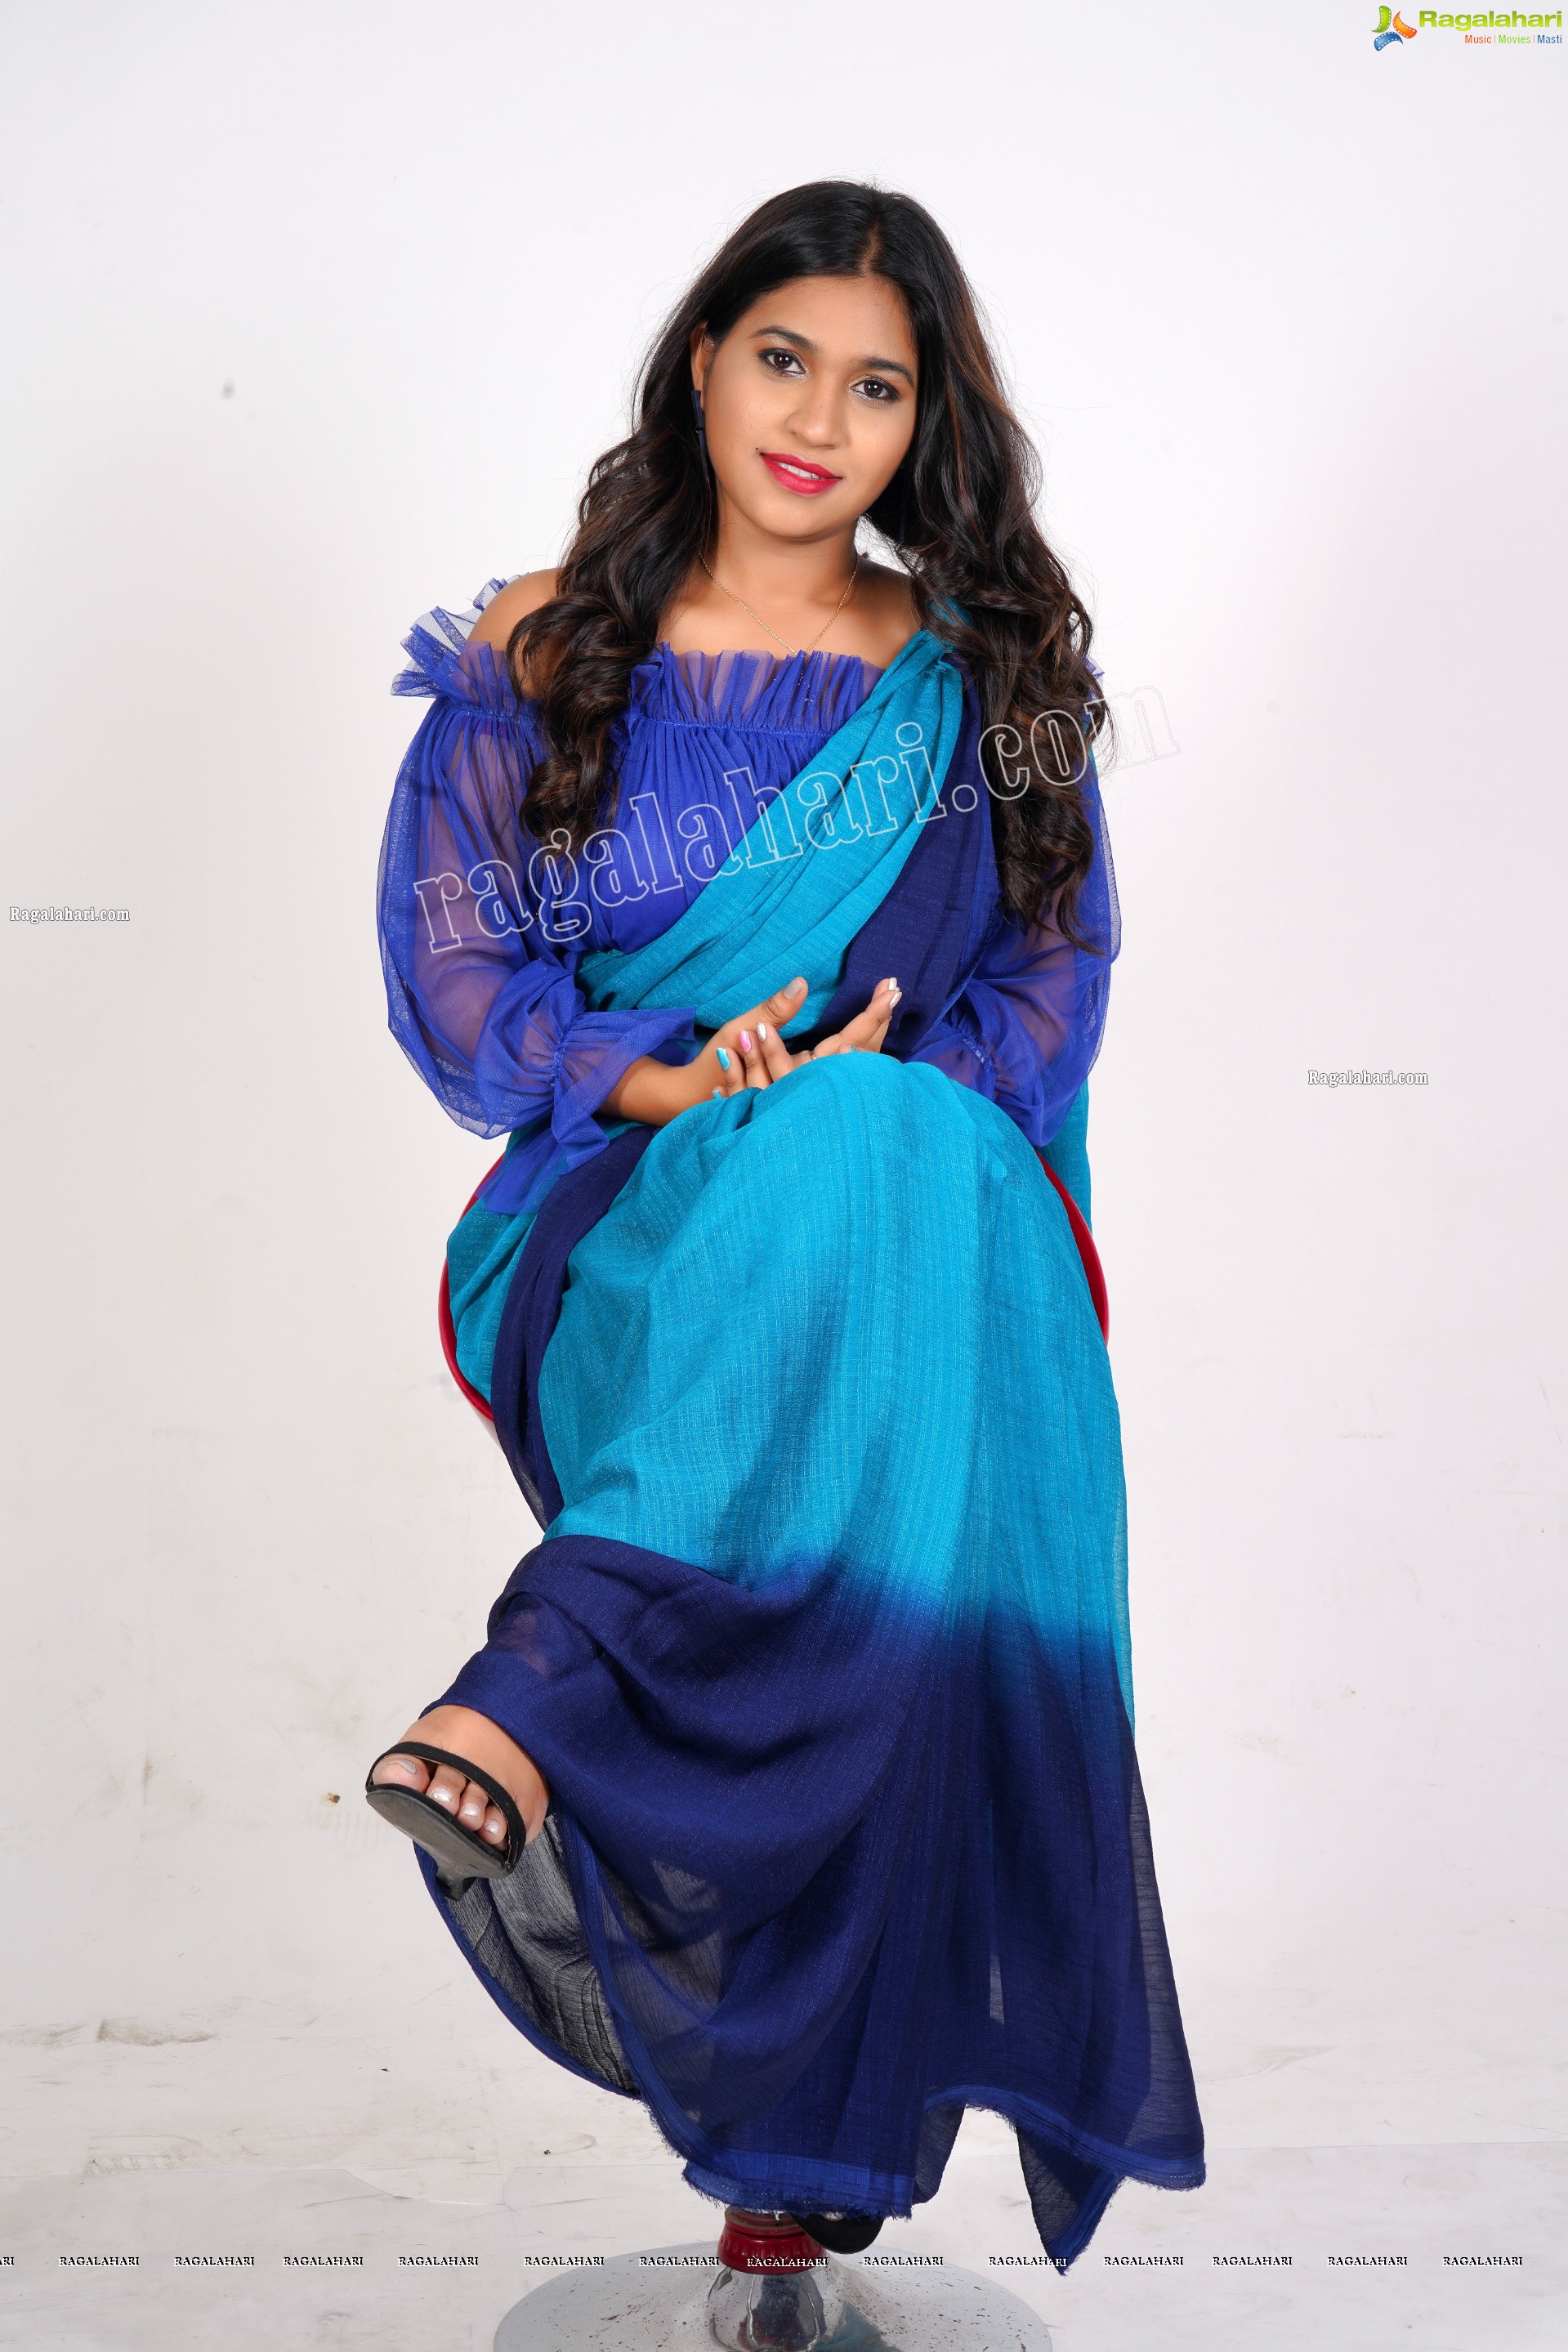 Honey Royal in Royal Blue Saree, Exclusive Photoshoot